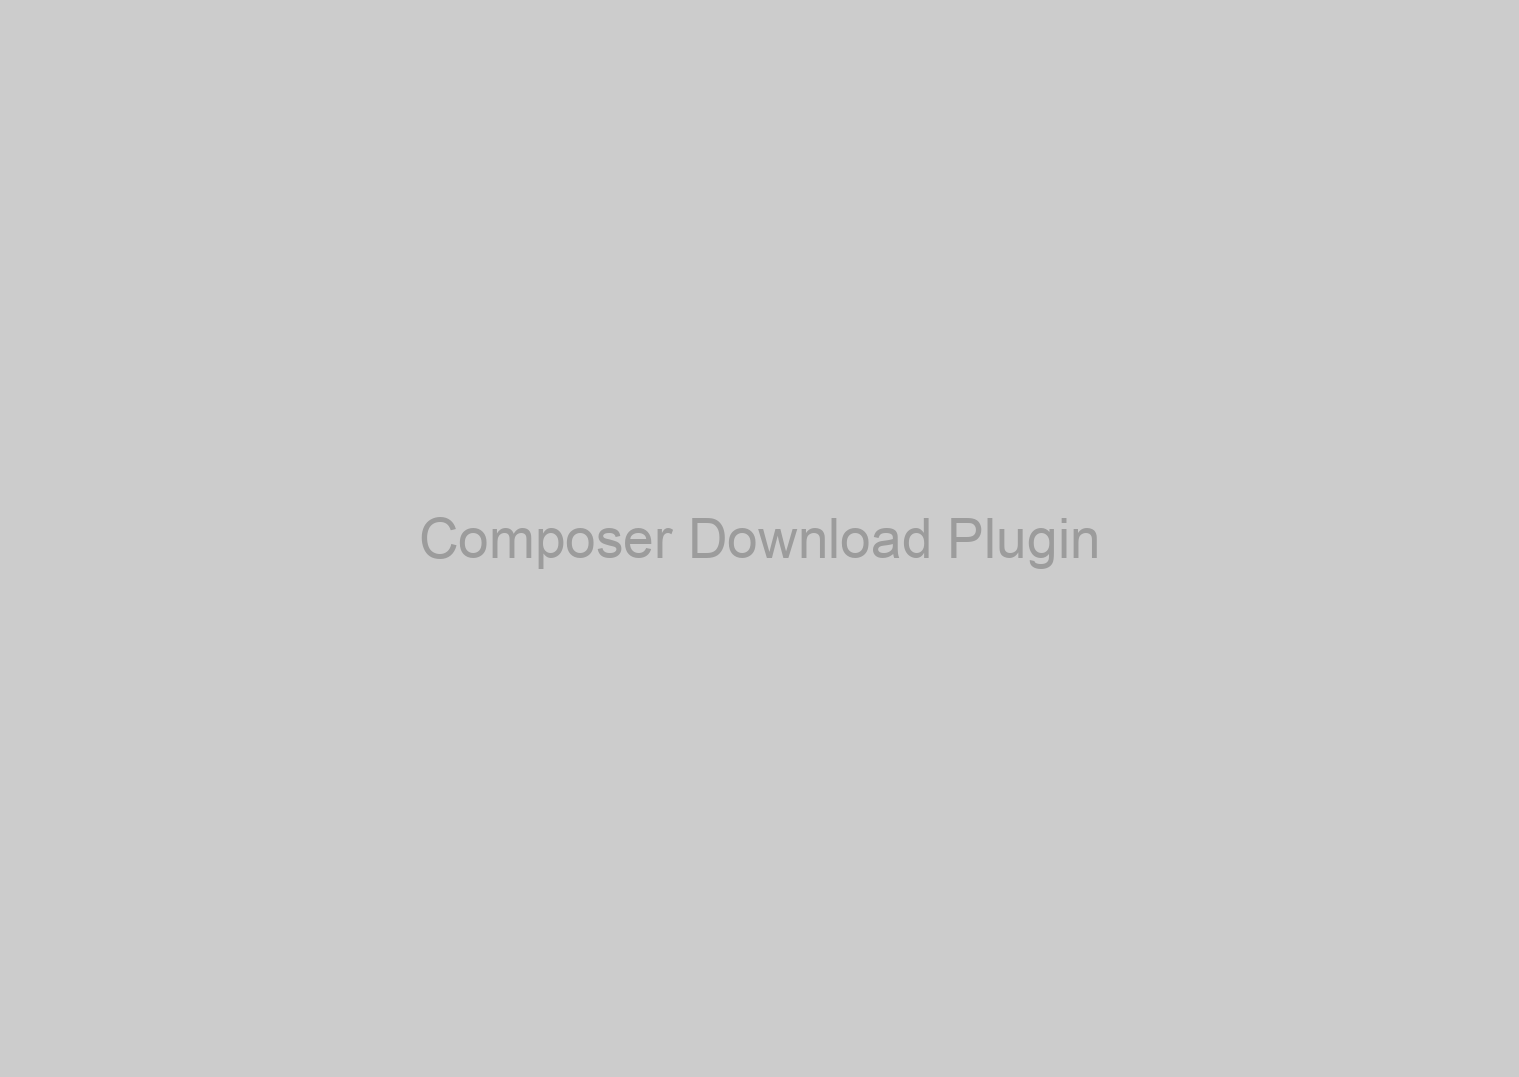 Composer Downloads Plugin